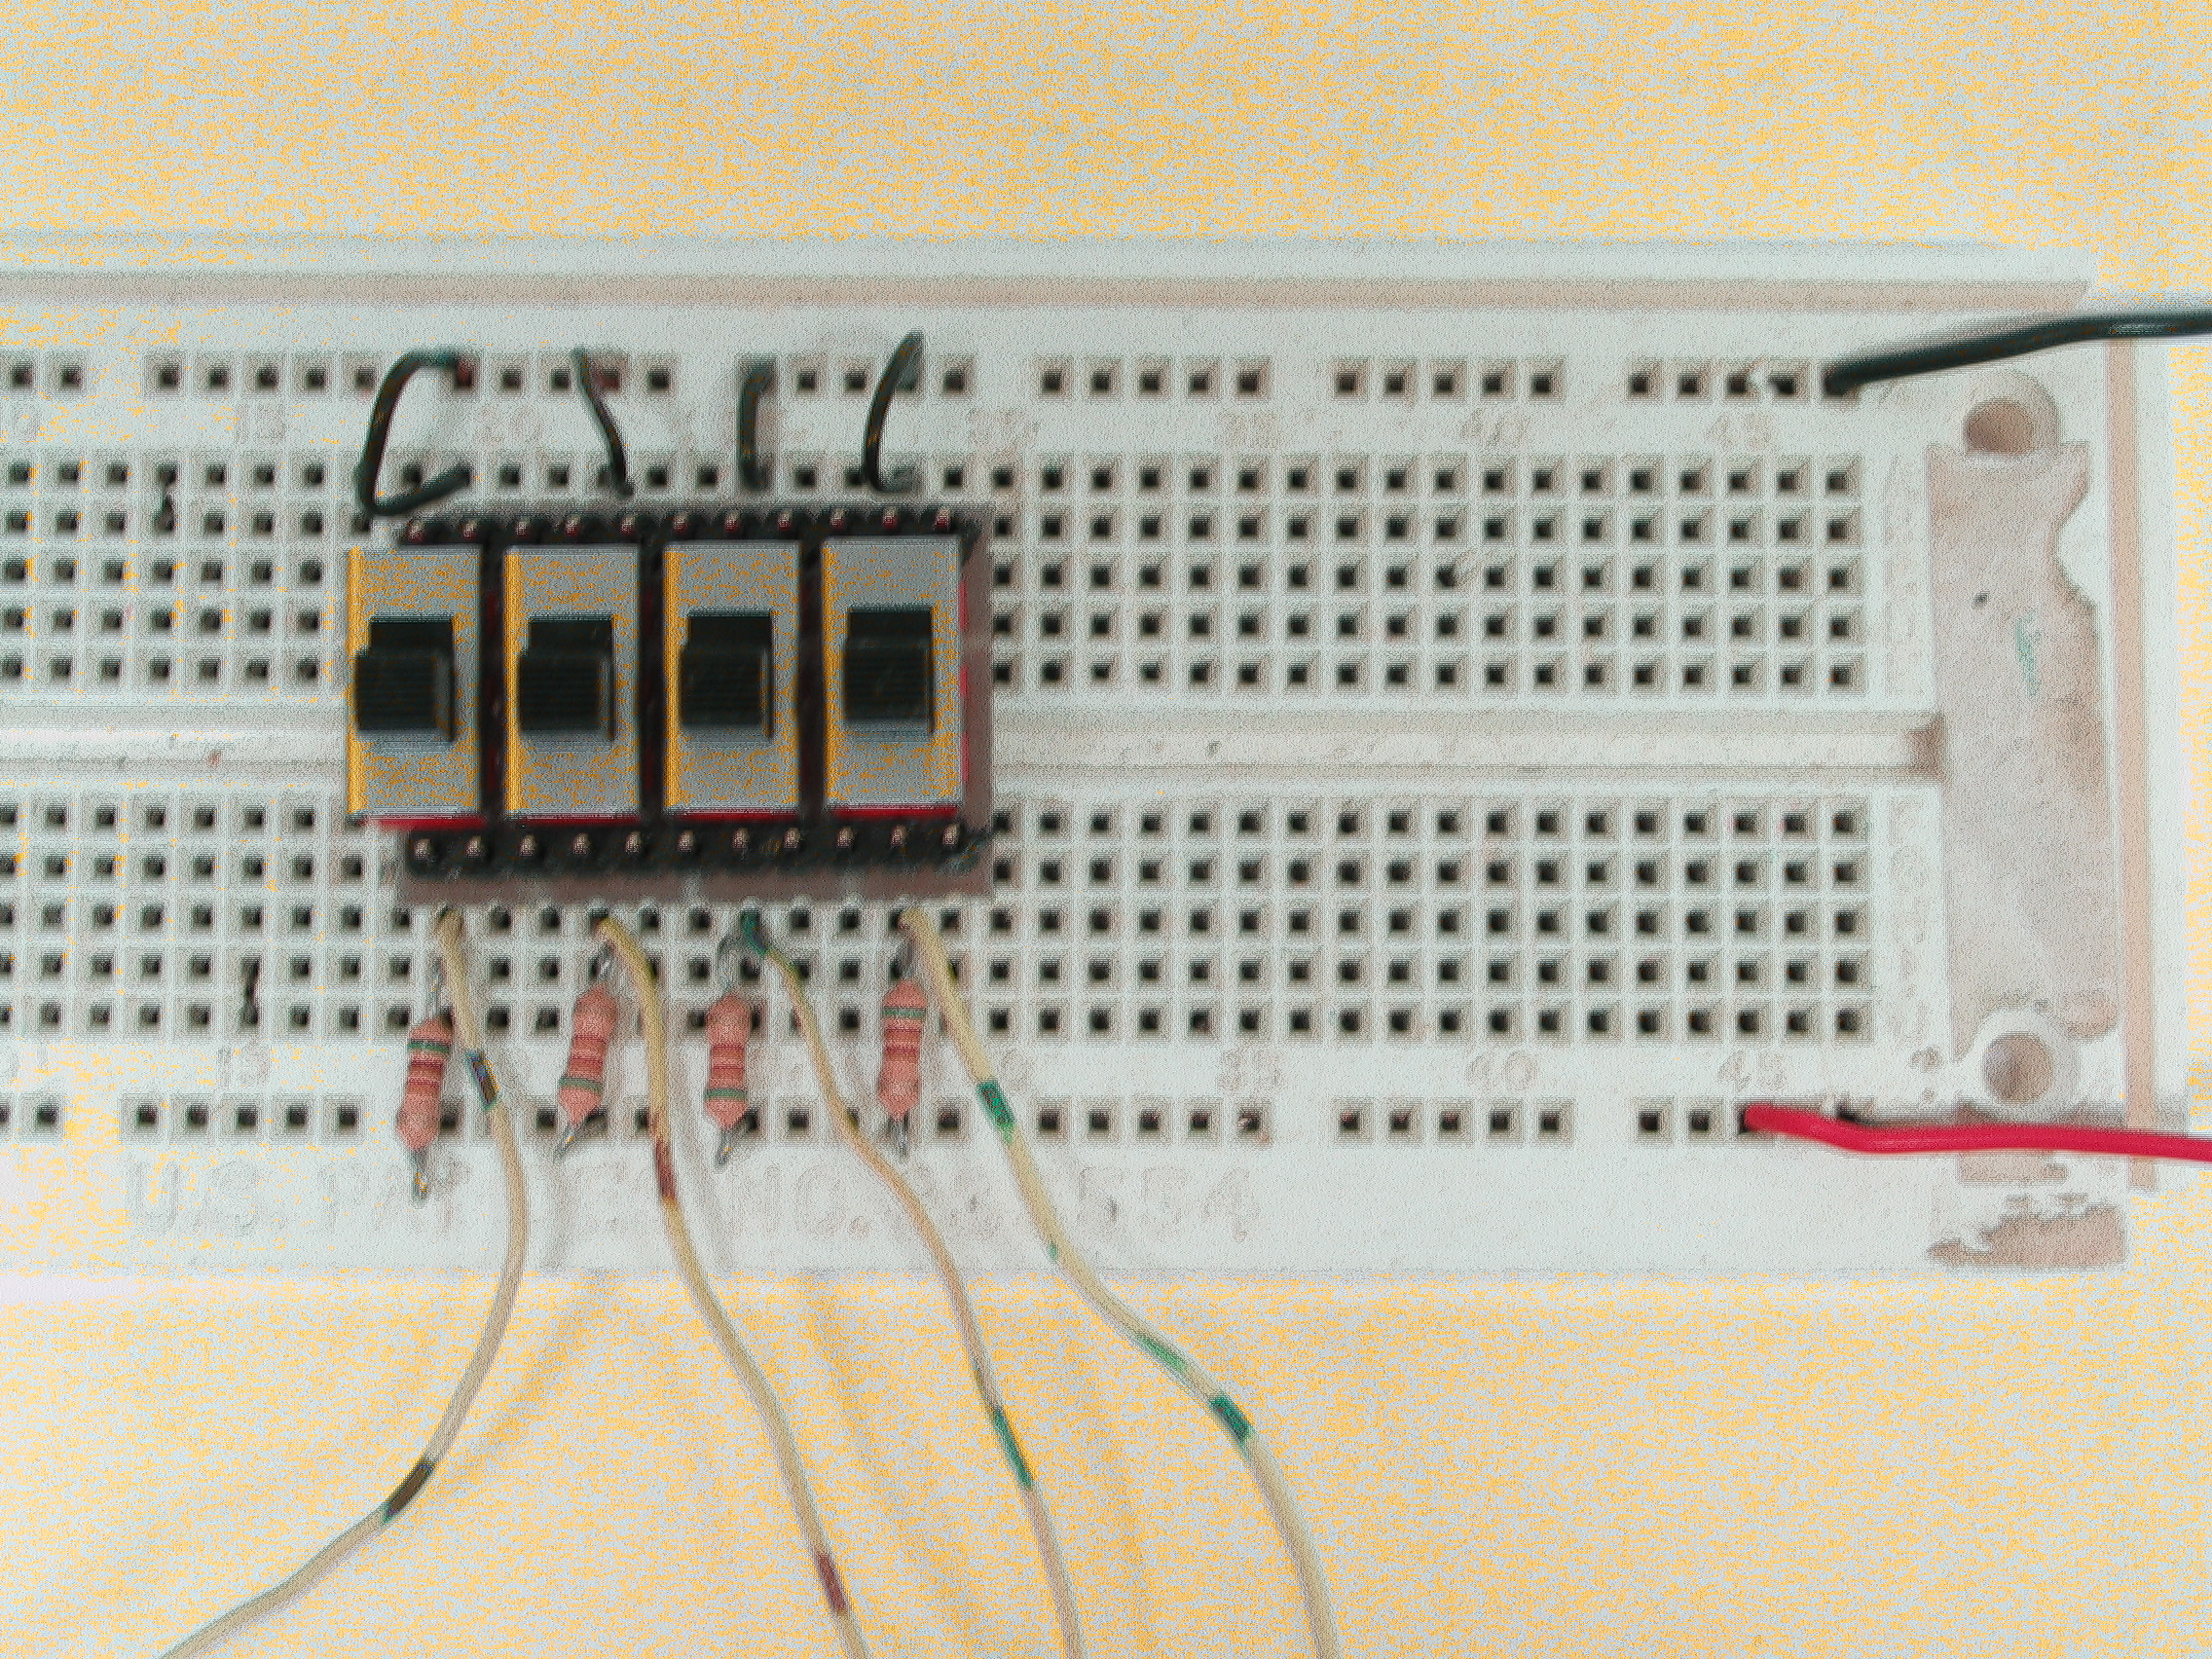 prototype switch with individual resistors (active low) 